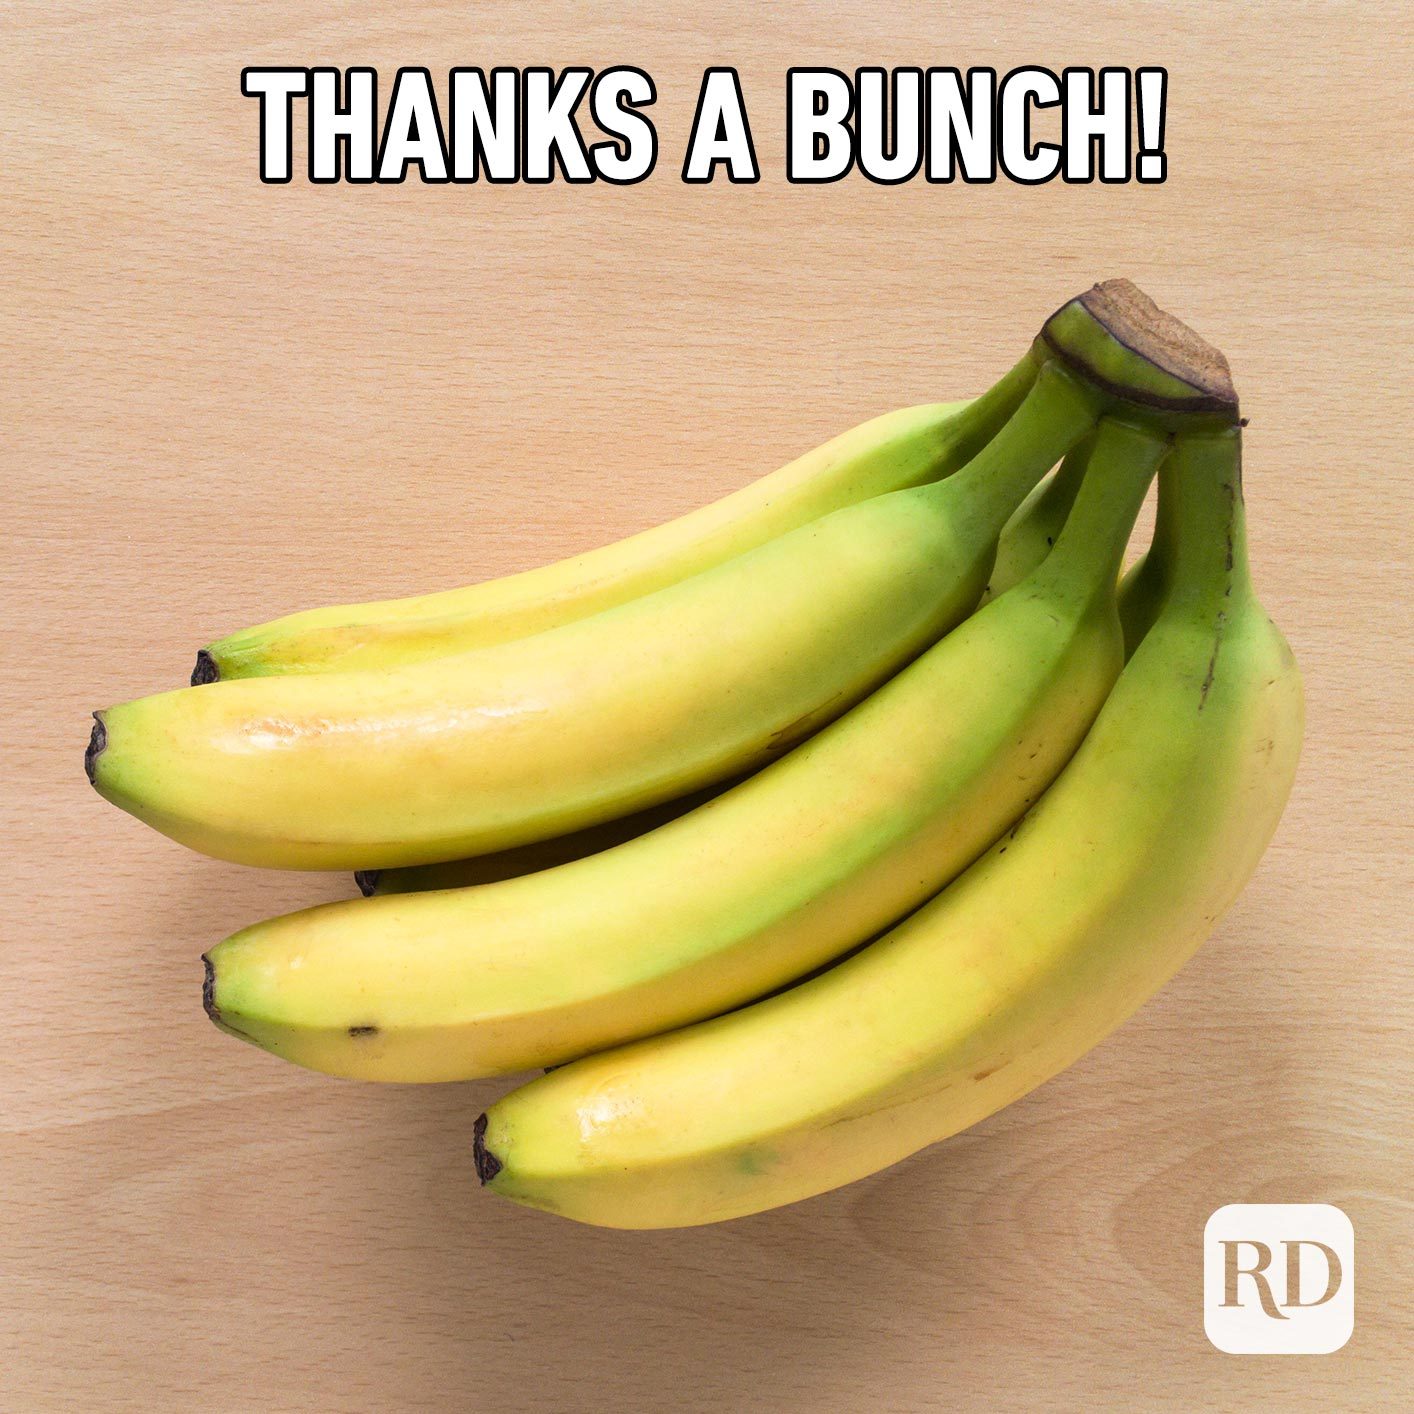 Bunch of bananas. Meme text: Thanks a bunch!